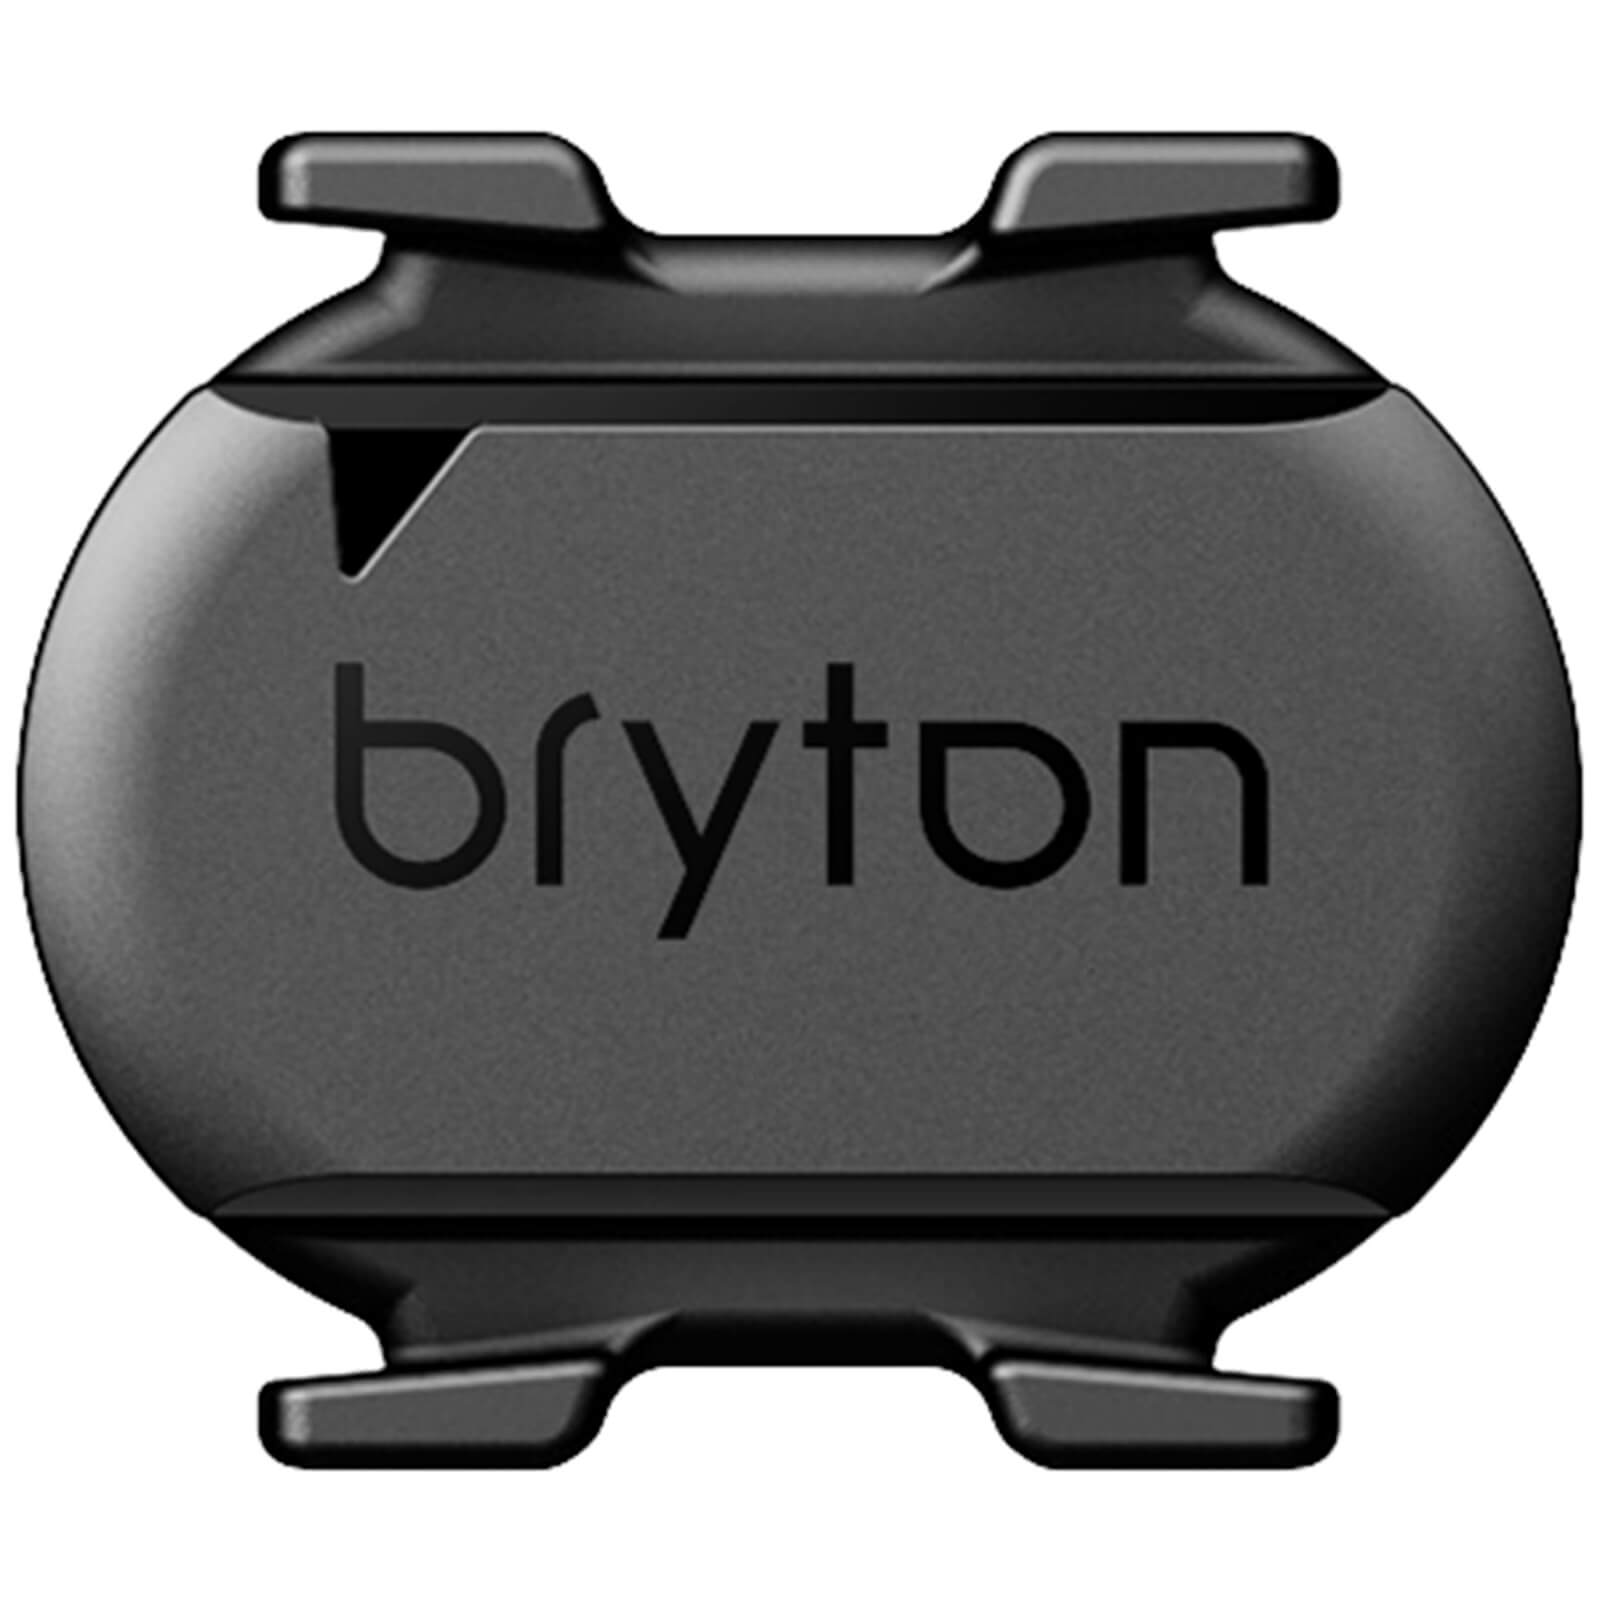 Bryton Smart Magnetless Bike Cadence Sensor